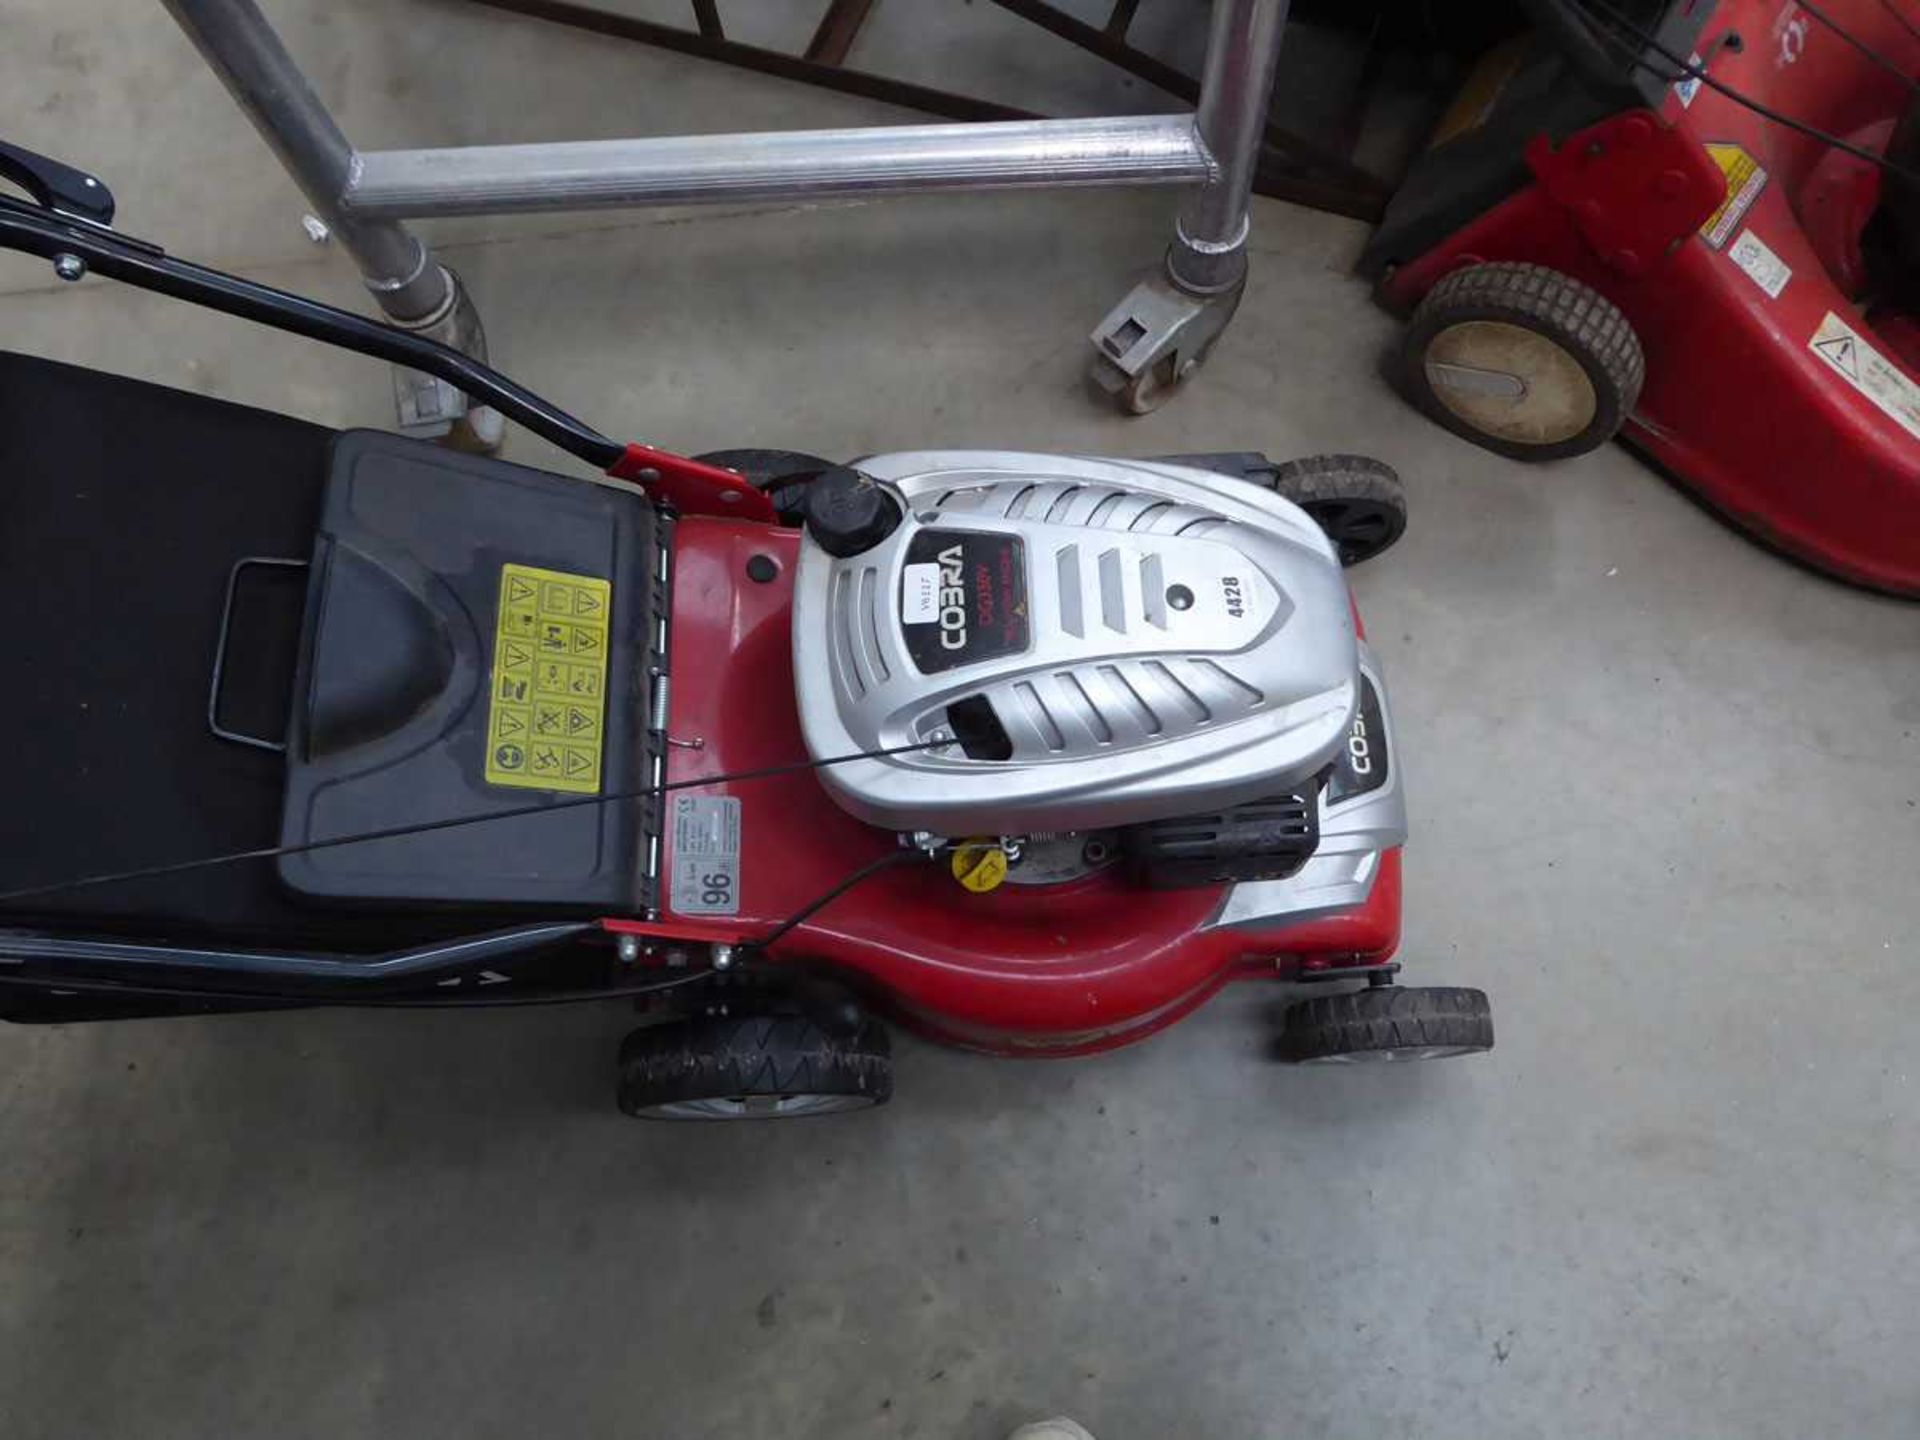 Cobra petrol powered rotary mower with grass box - Image 2 of 2